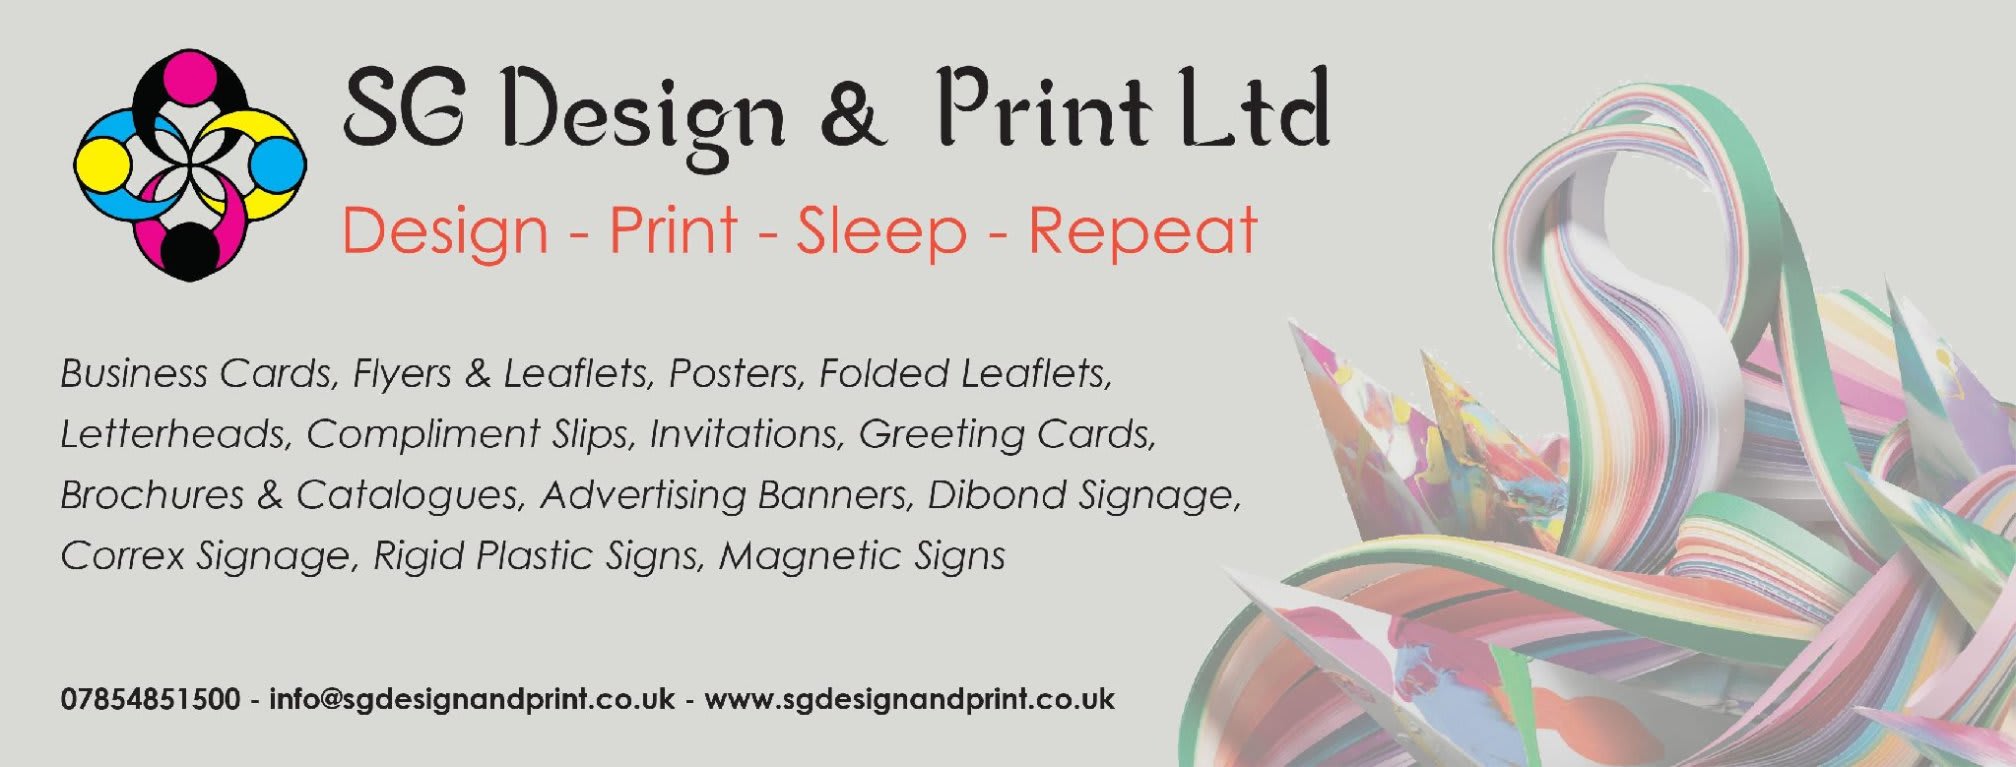 Images SG Design & Print Ltd